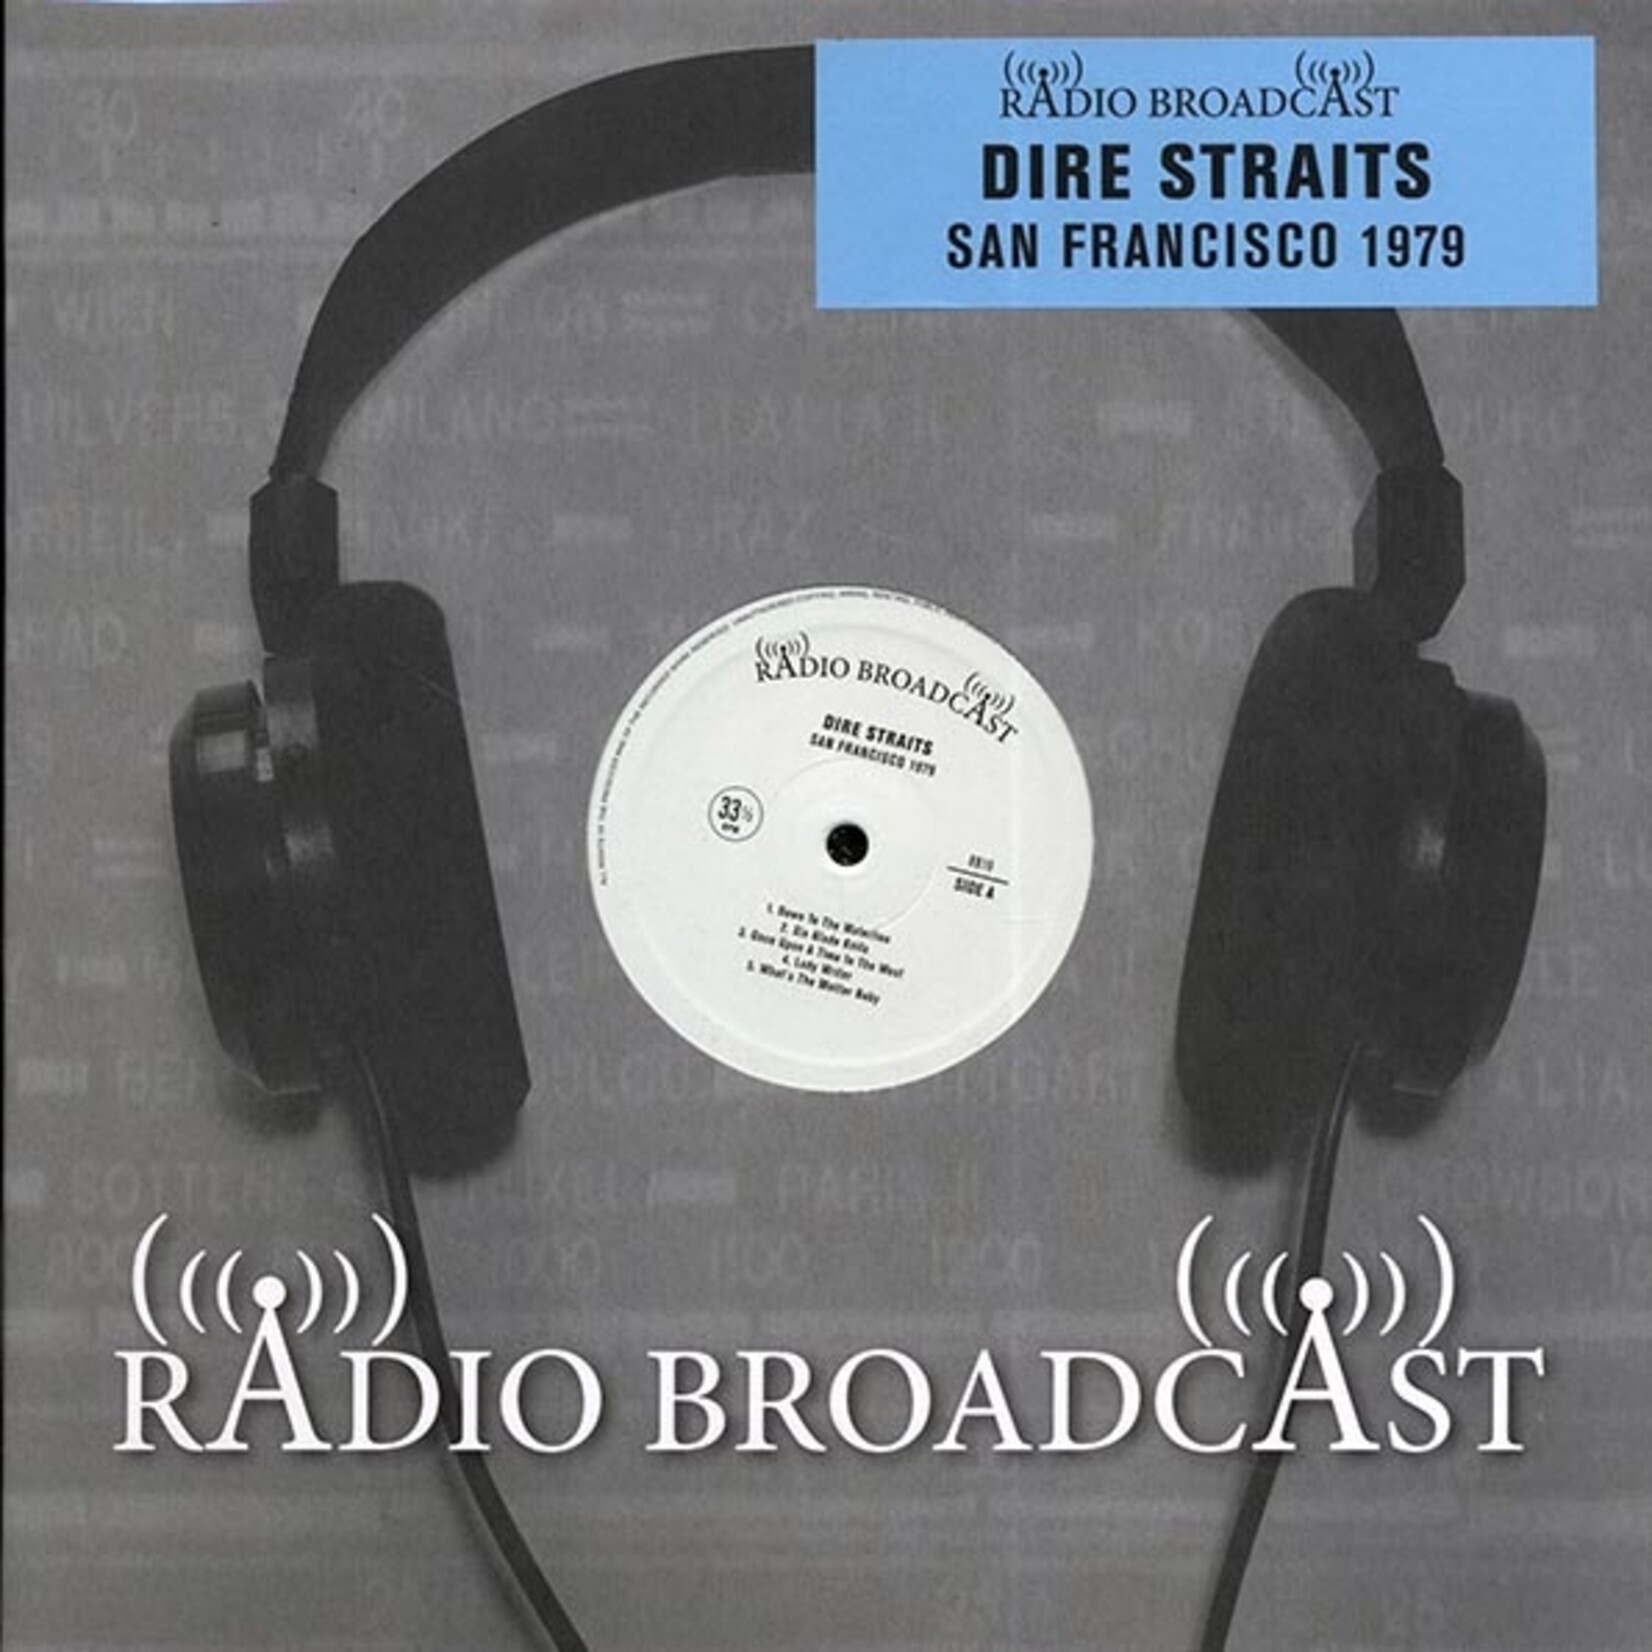 Dire Straits - San Francisco 1979 (Radio Broadcast Records) (Ltd. 300 Copies)